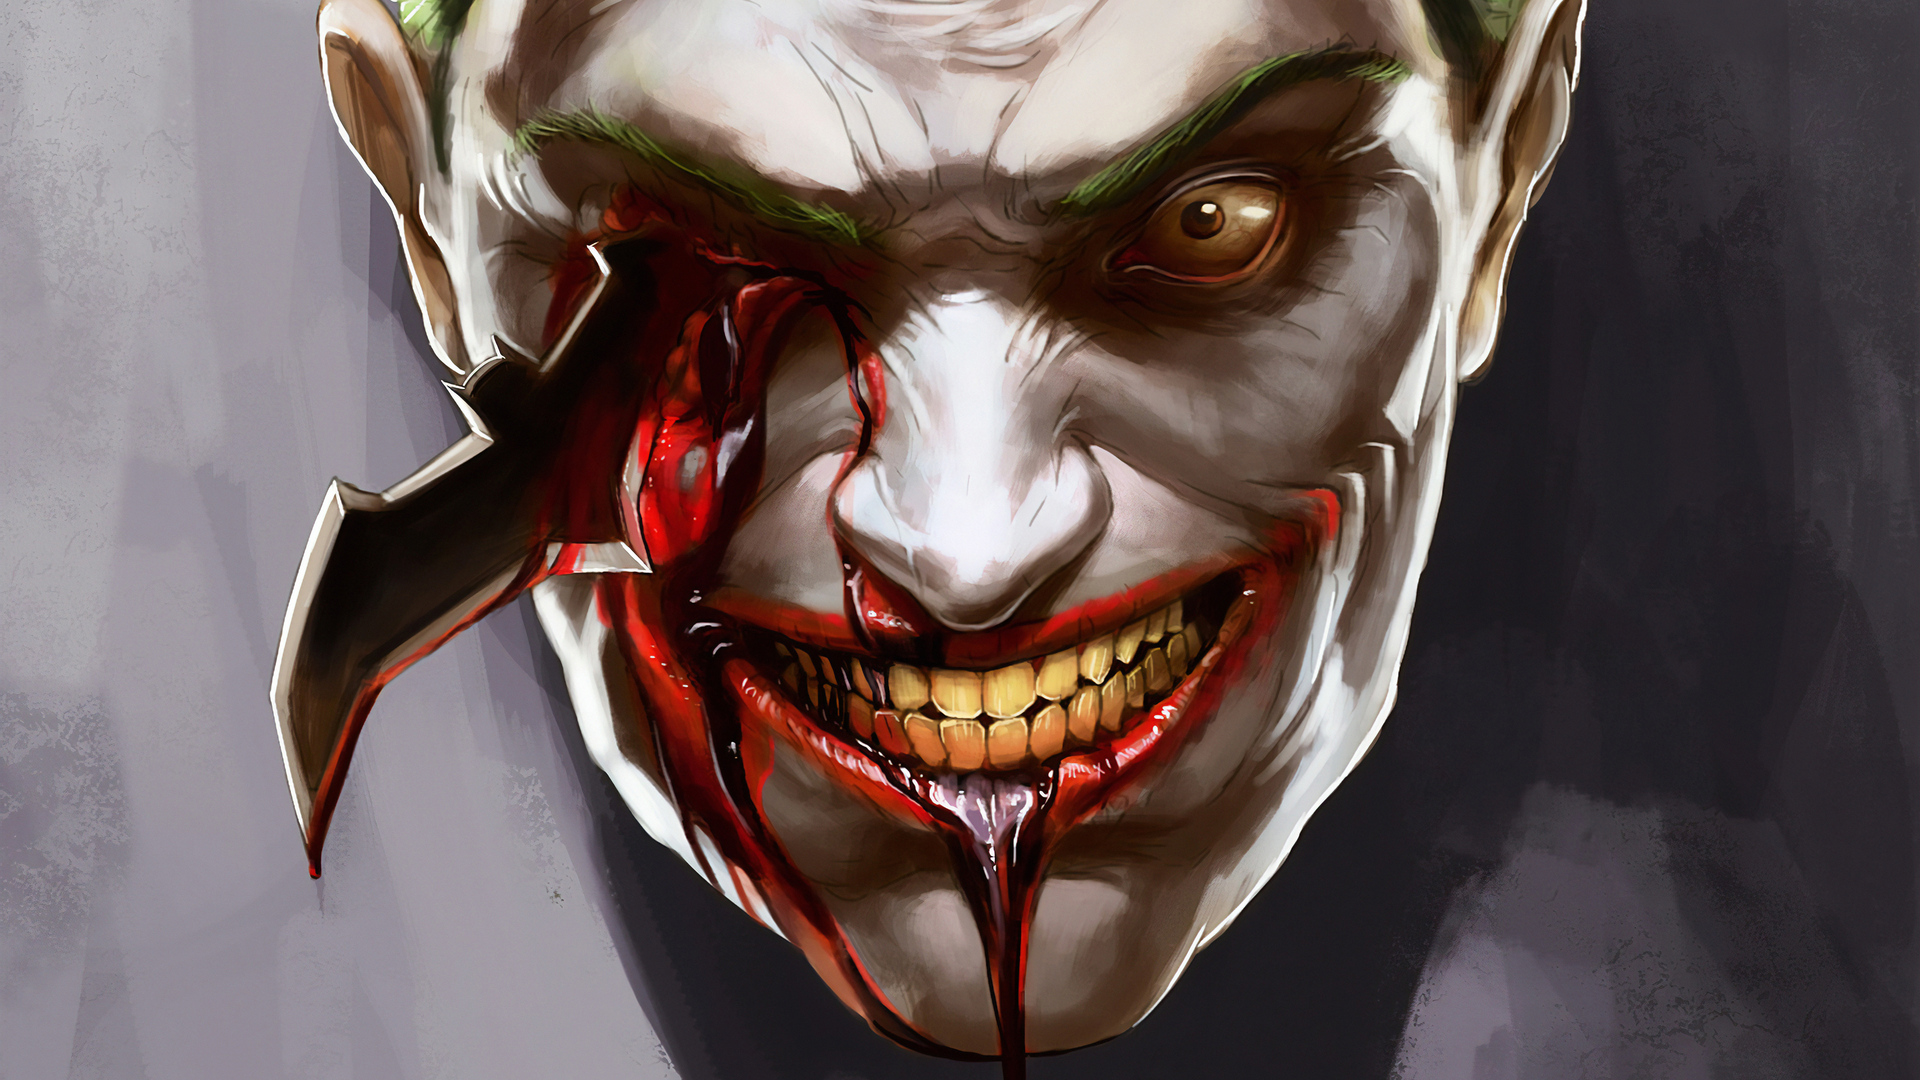 Joker Eye Destroyed With Batrage